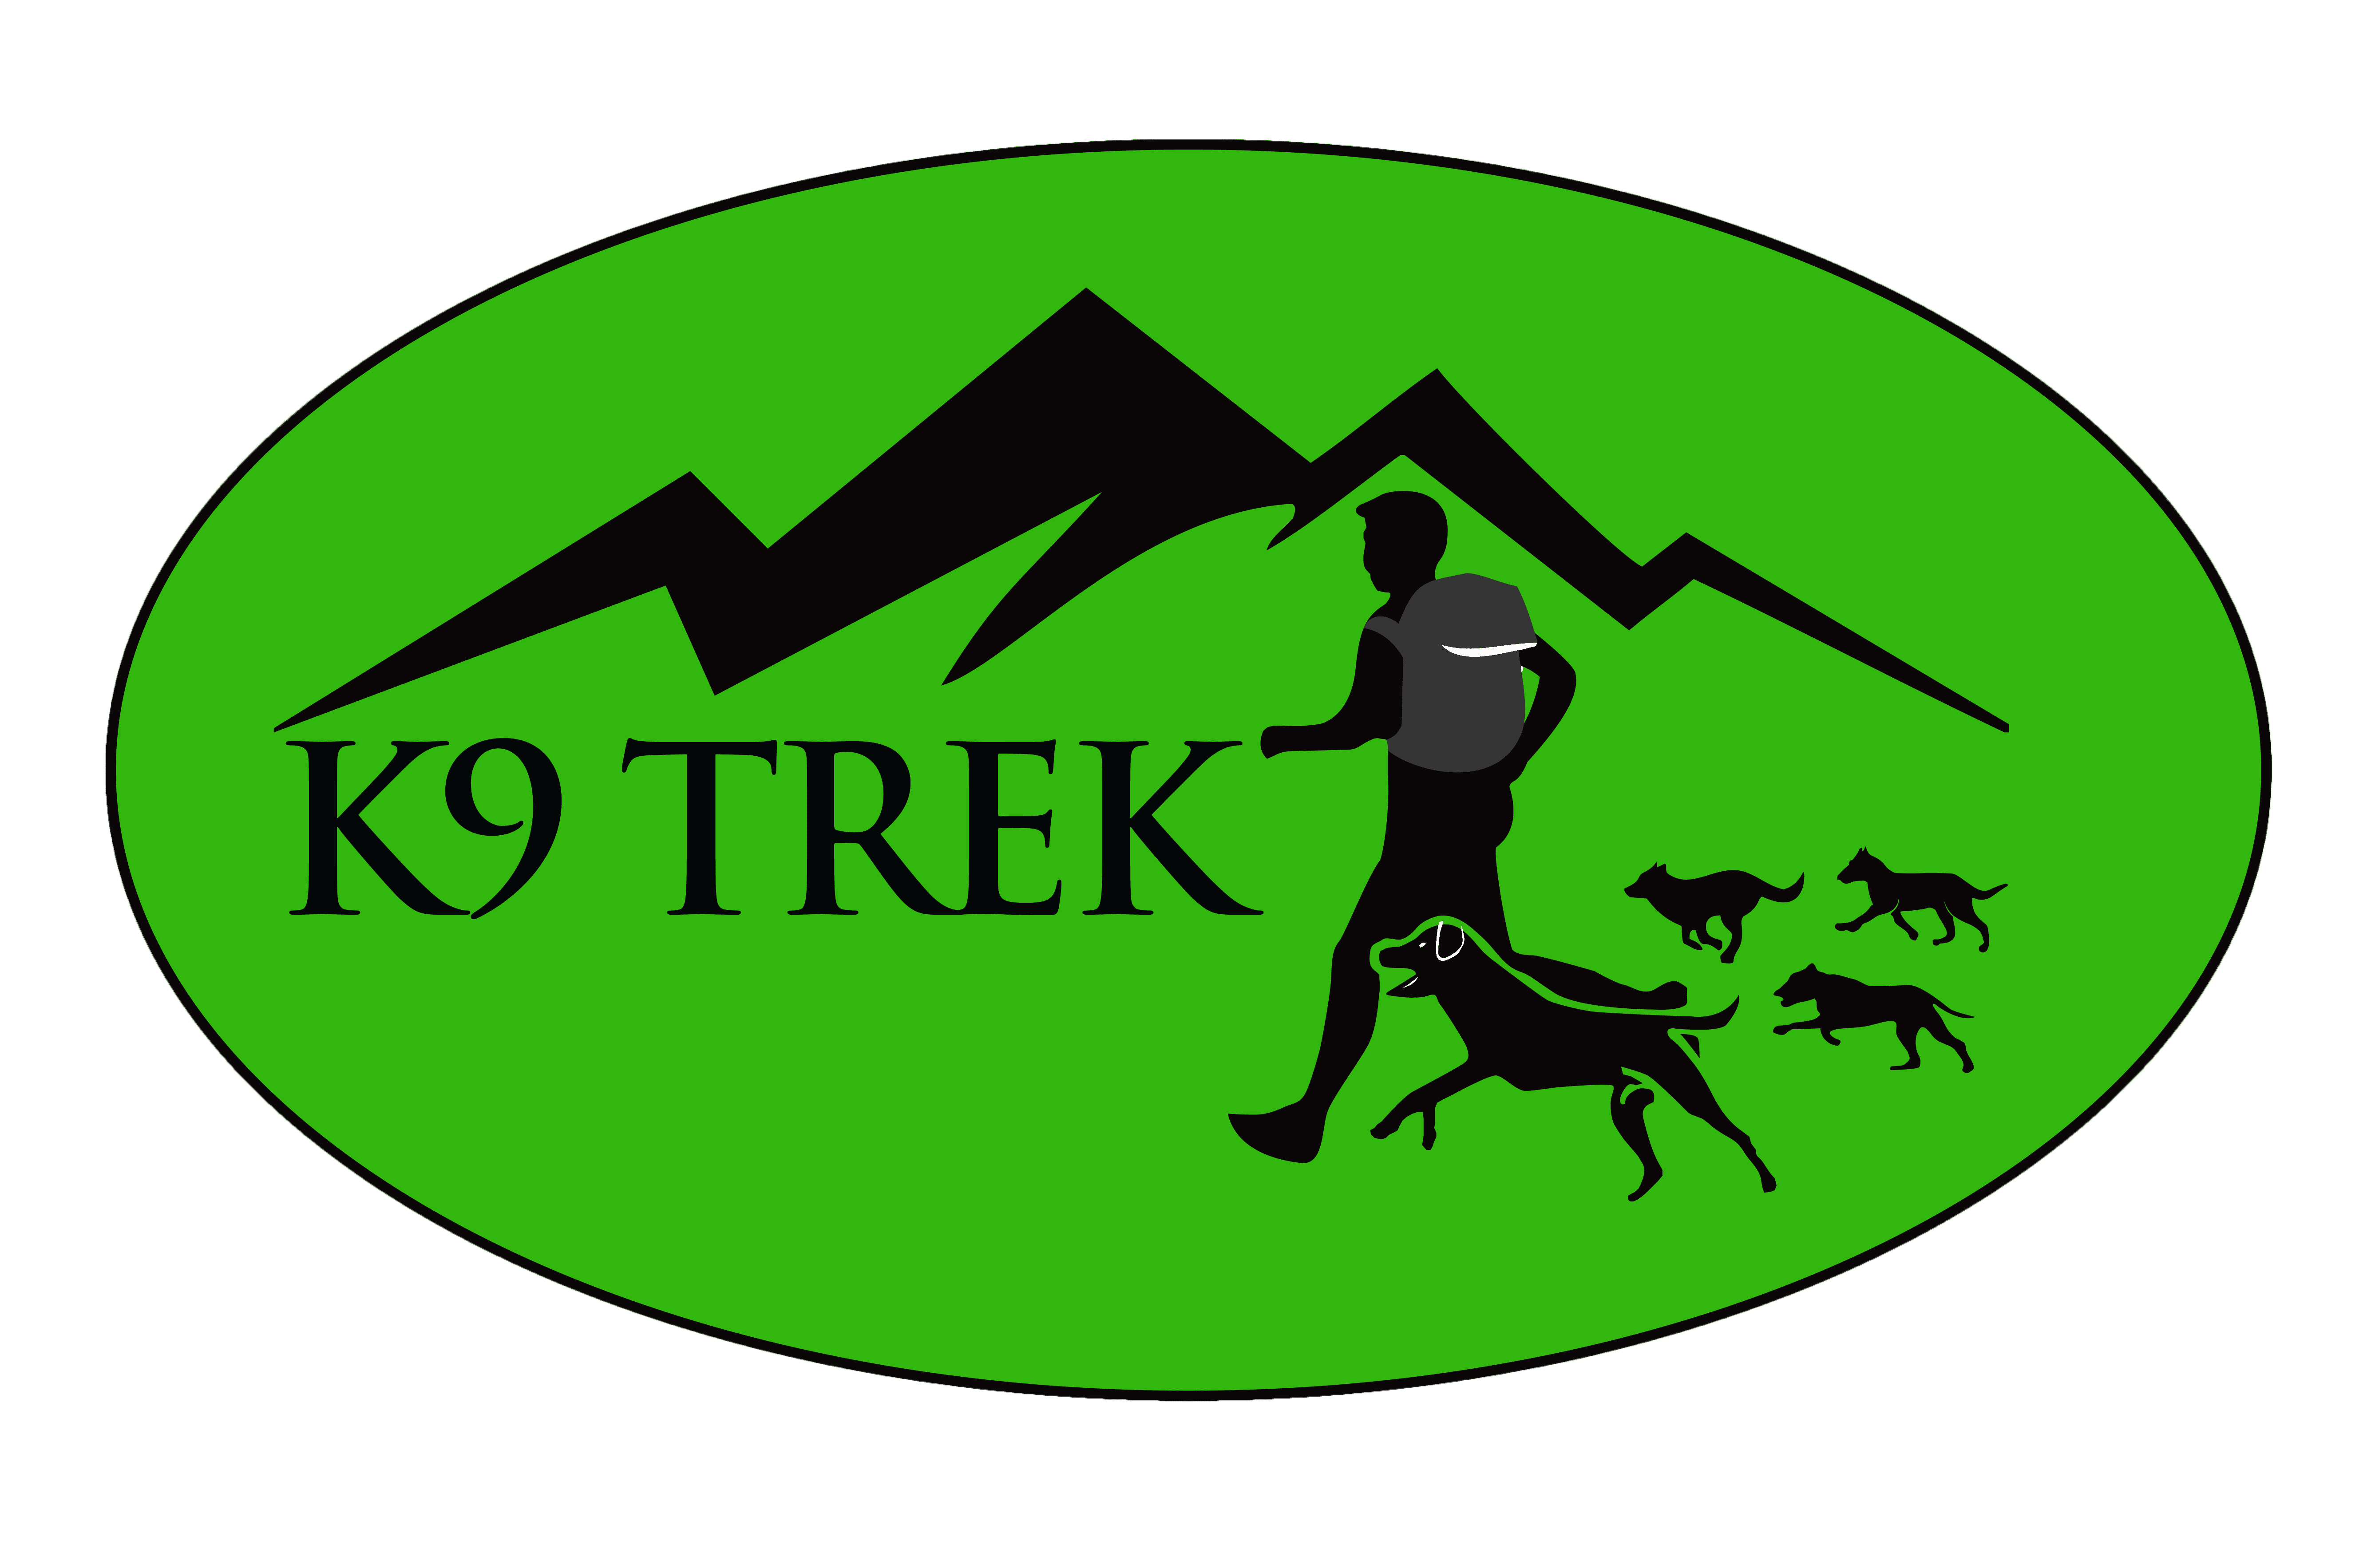 K9 Trek LLC